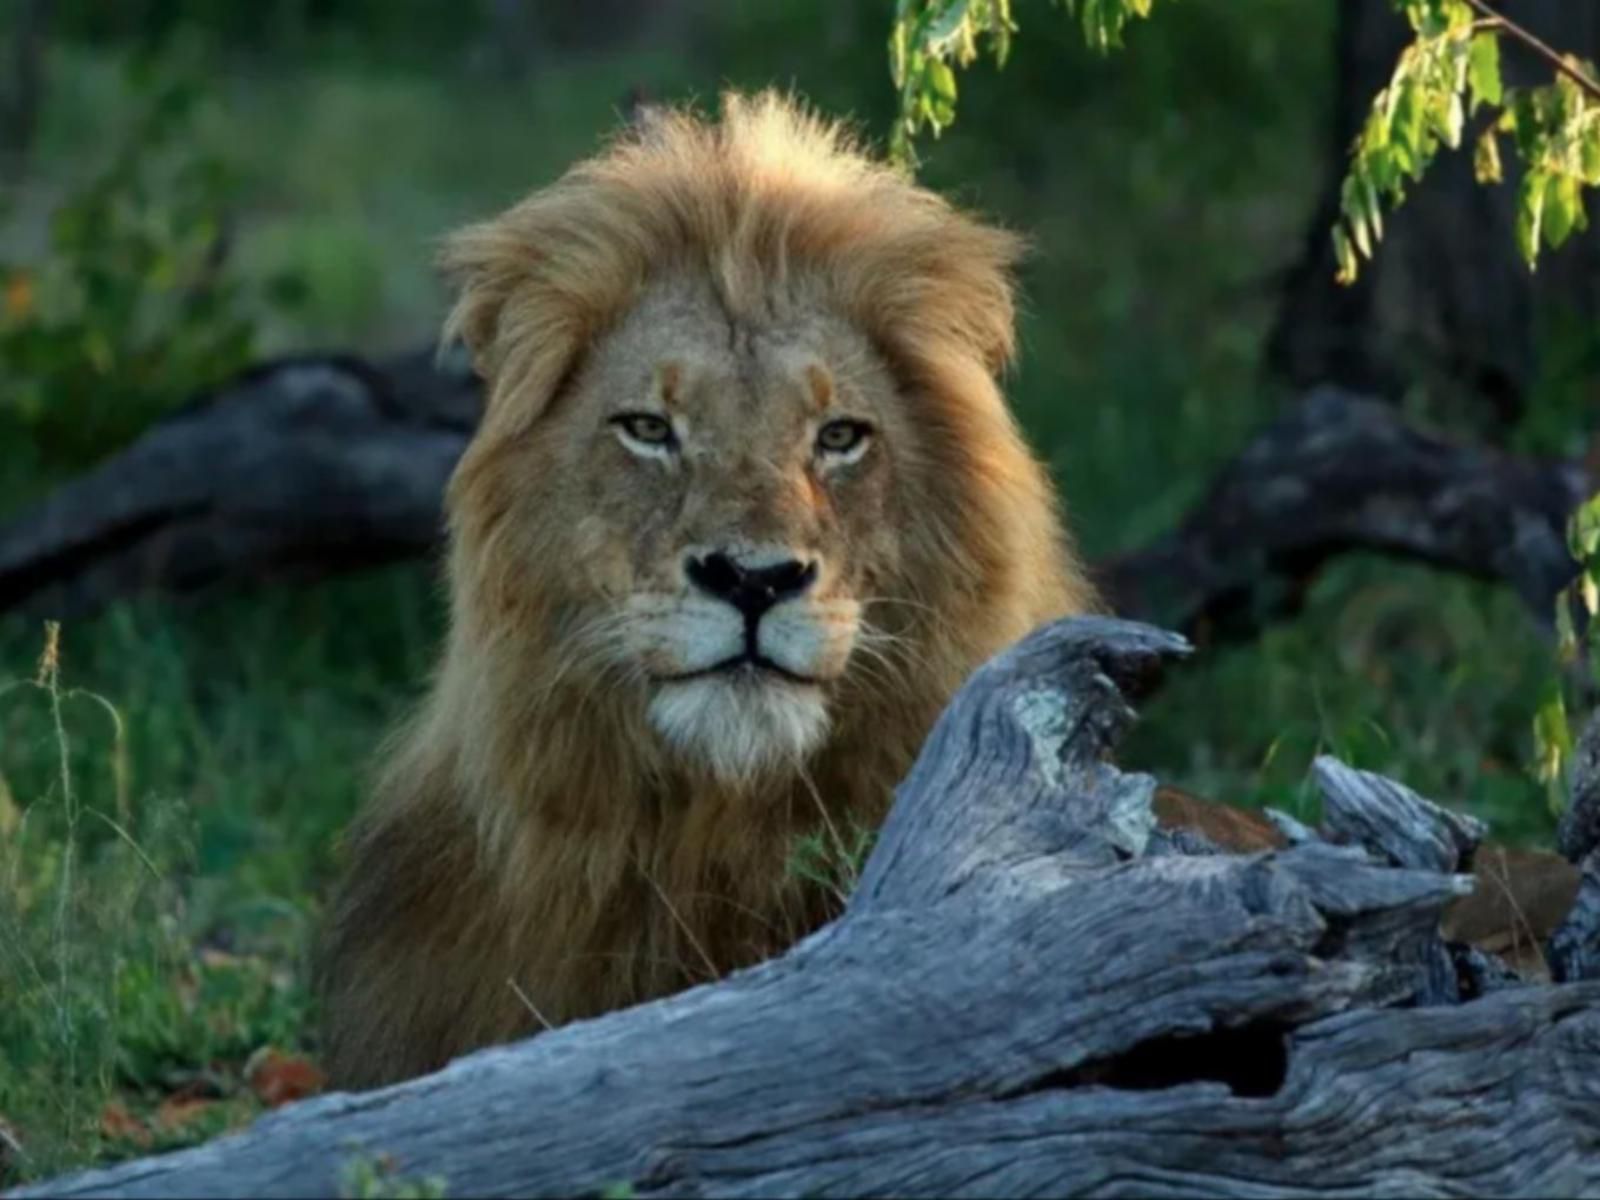 Nkorho Bush Lodge Sabi Sand Reserve Mpumalanga South Africa Lion, Mammal, Animal, Big Cat, Predator